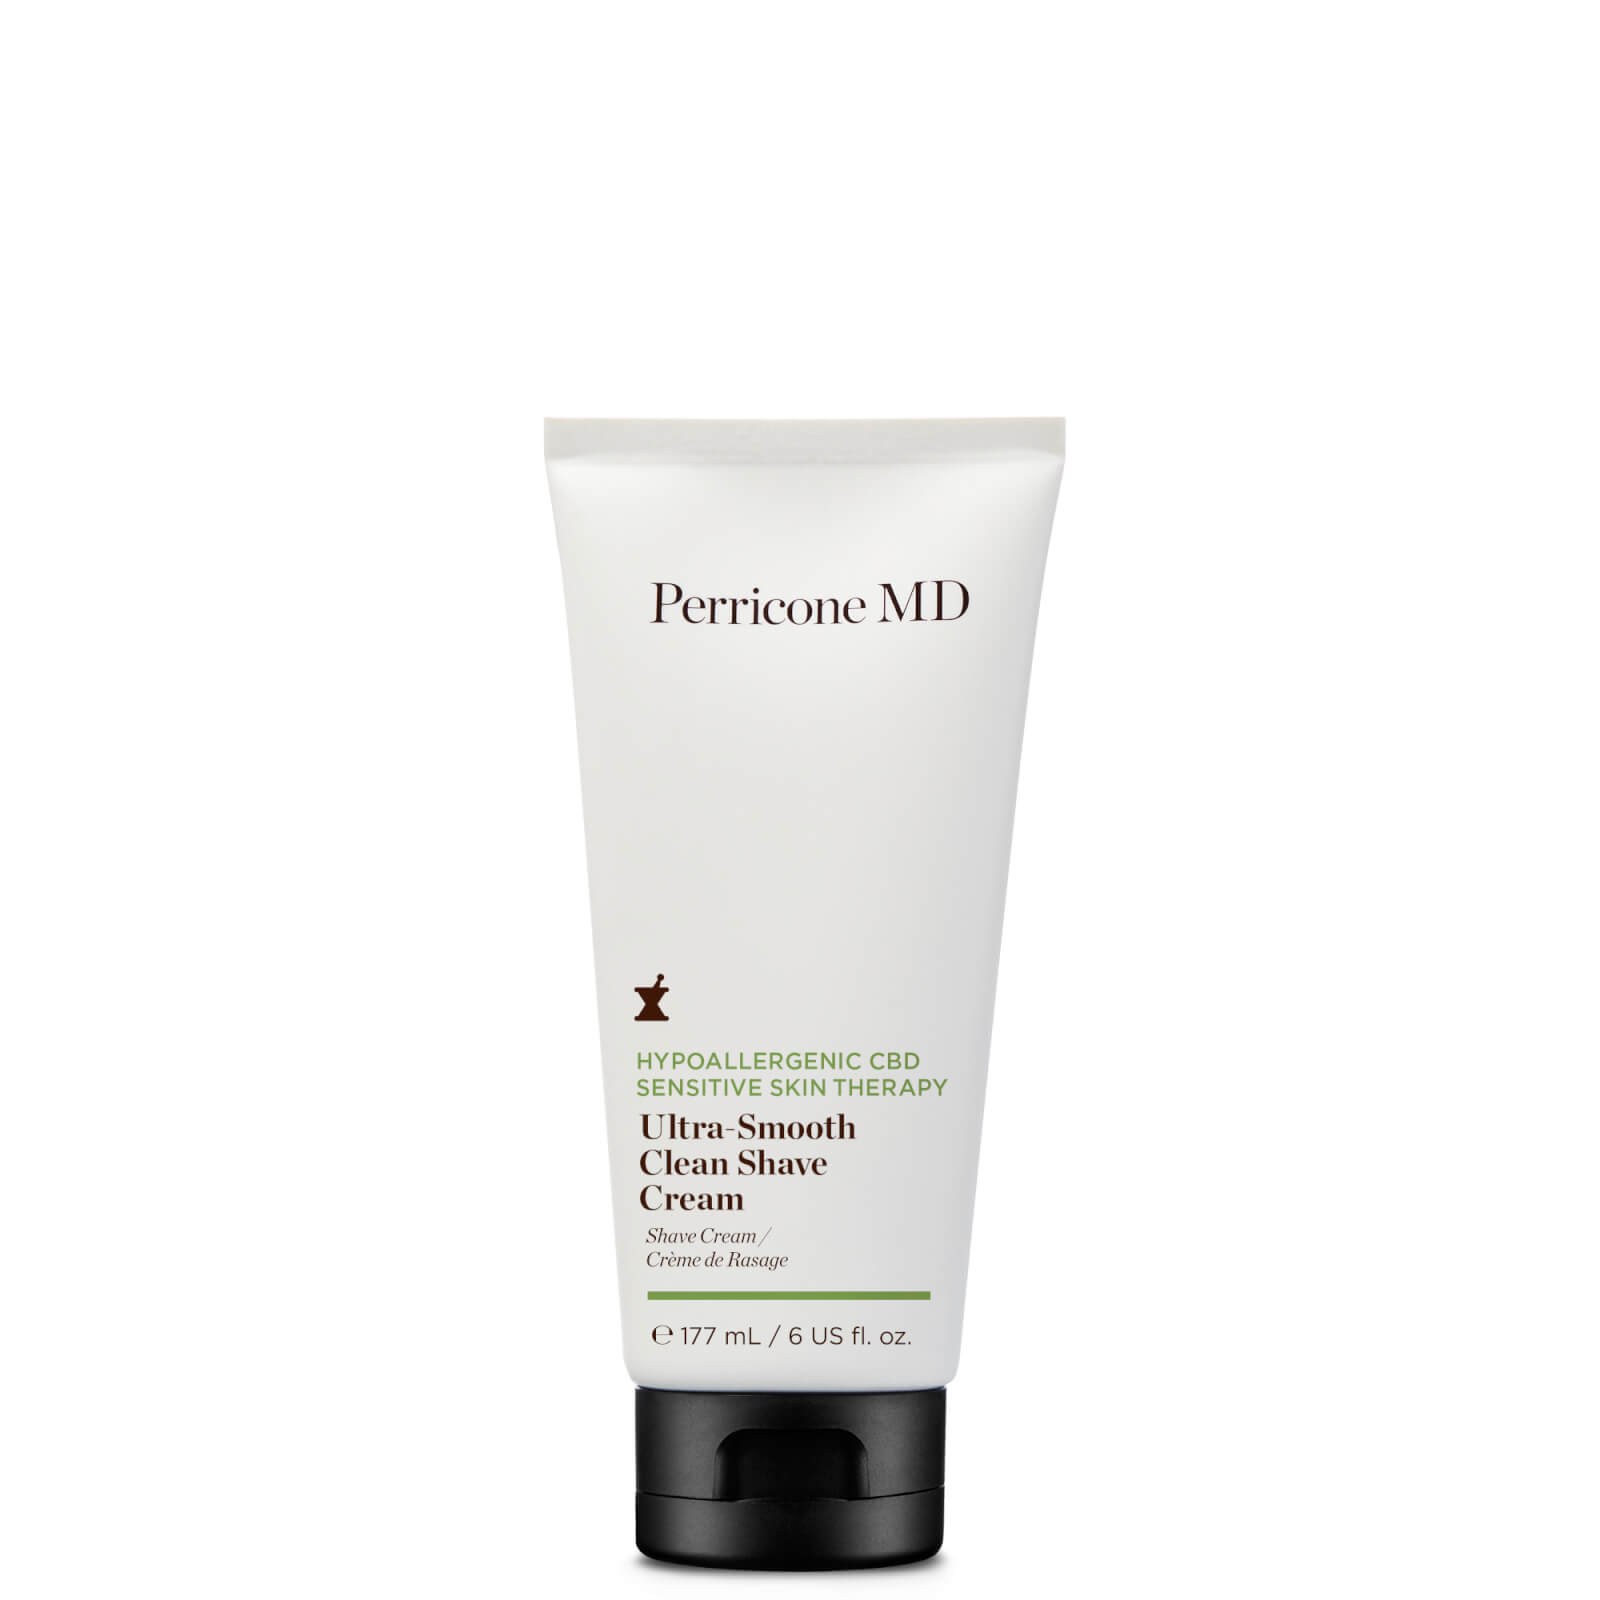 Perricone MD CBD Hypoallergenic Sensitive Skin Therapy Ultra-Smooth Clean Shave Cream 177ml - 6 oz /